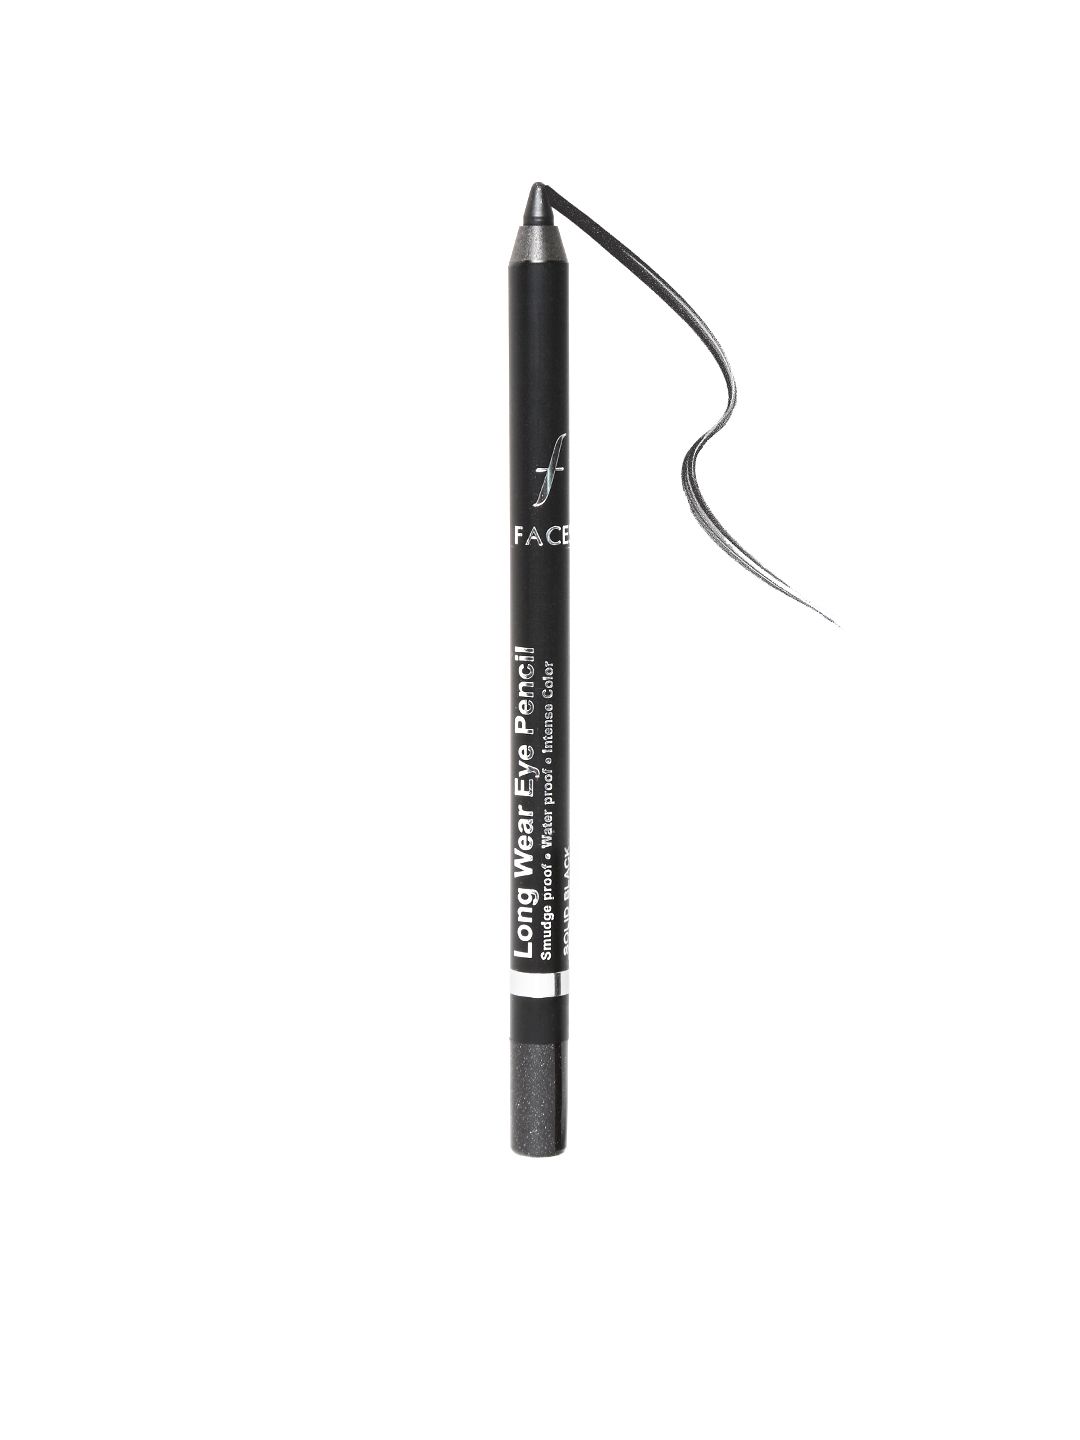 FACES CANADA Longwear Eye Pencil - 02 Solid Black Price in India